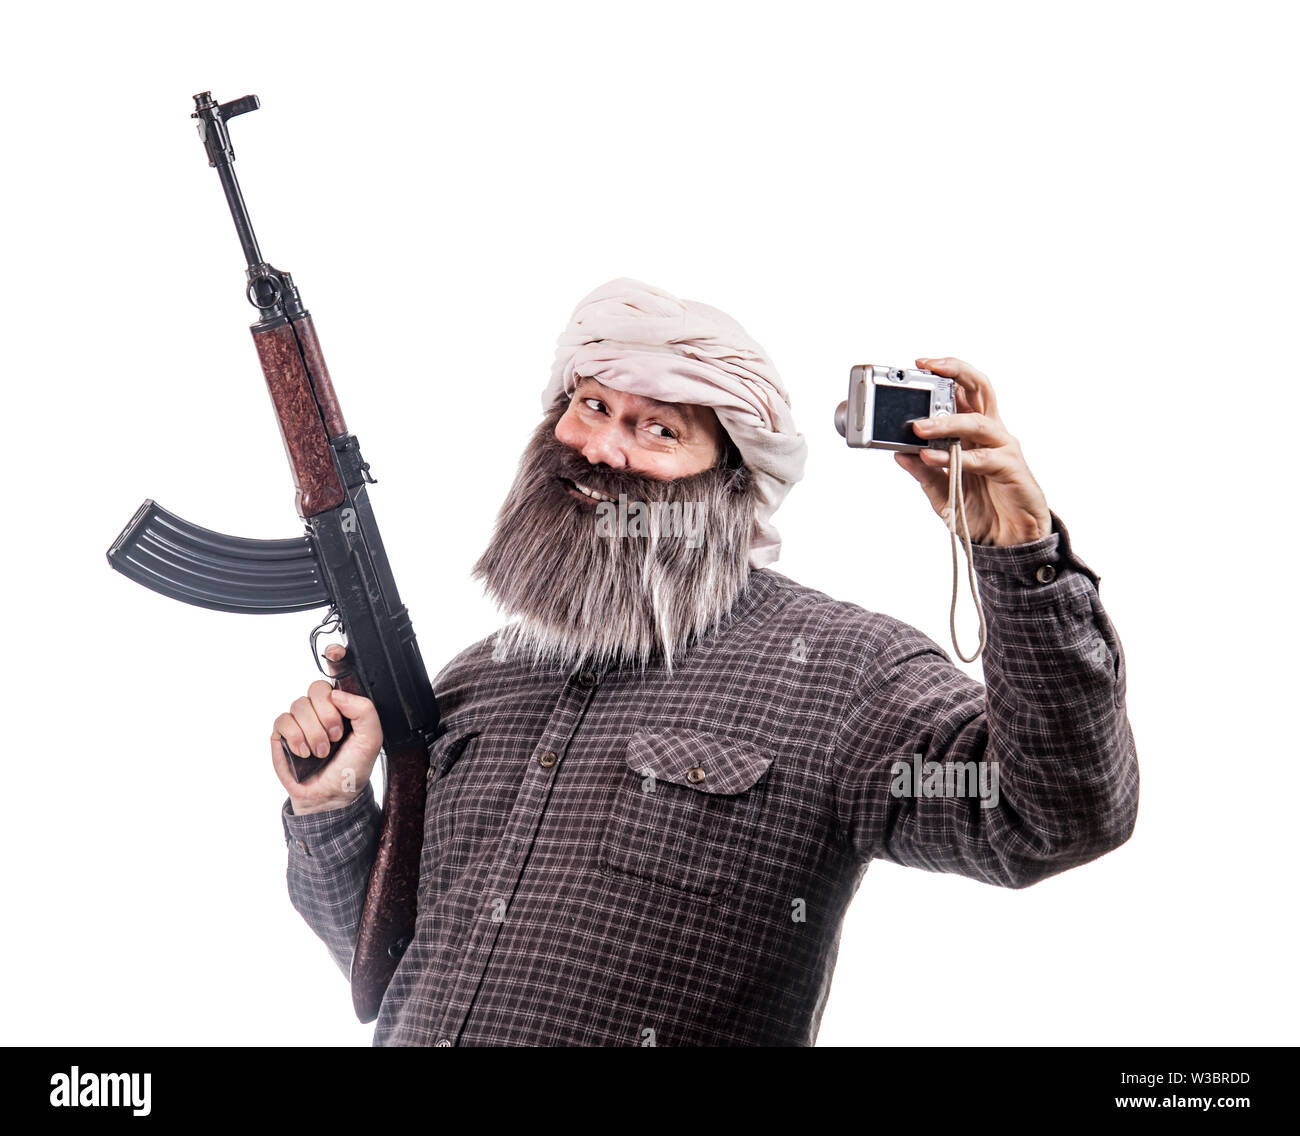 Funny man gun hi-res stock photography and images - Alamy